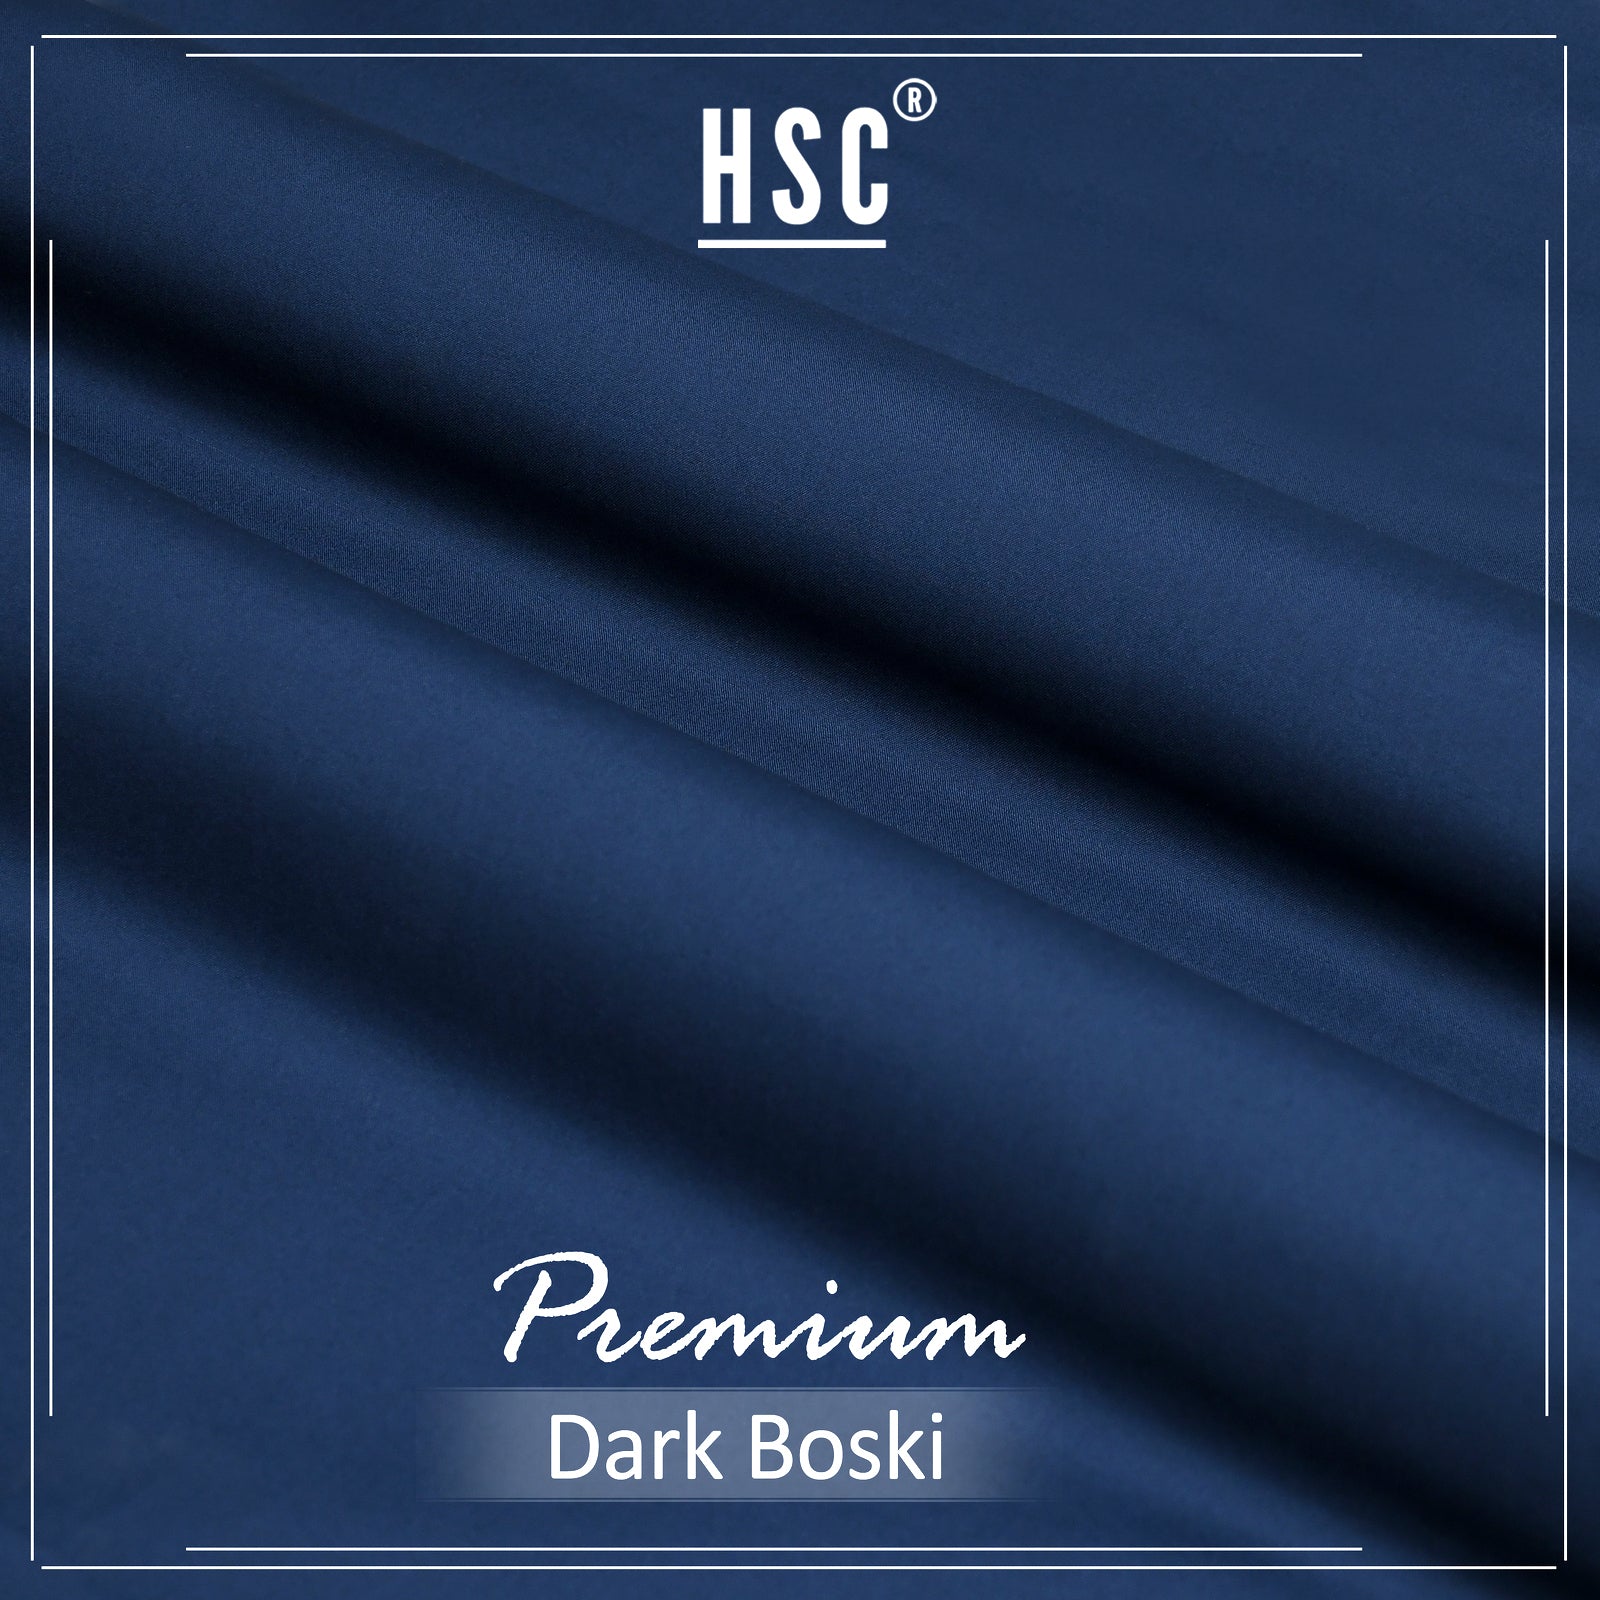 Buy1 Get 1 Free Premium Dark Boski For Men - PDB3 HSC